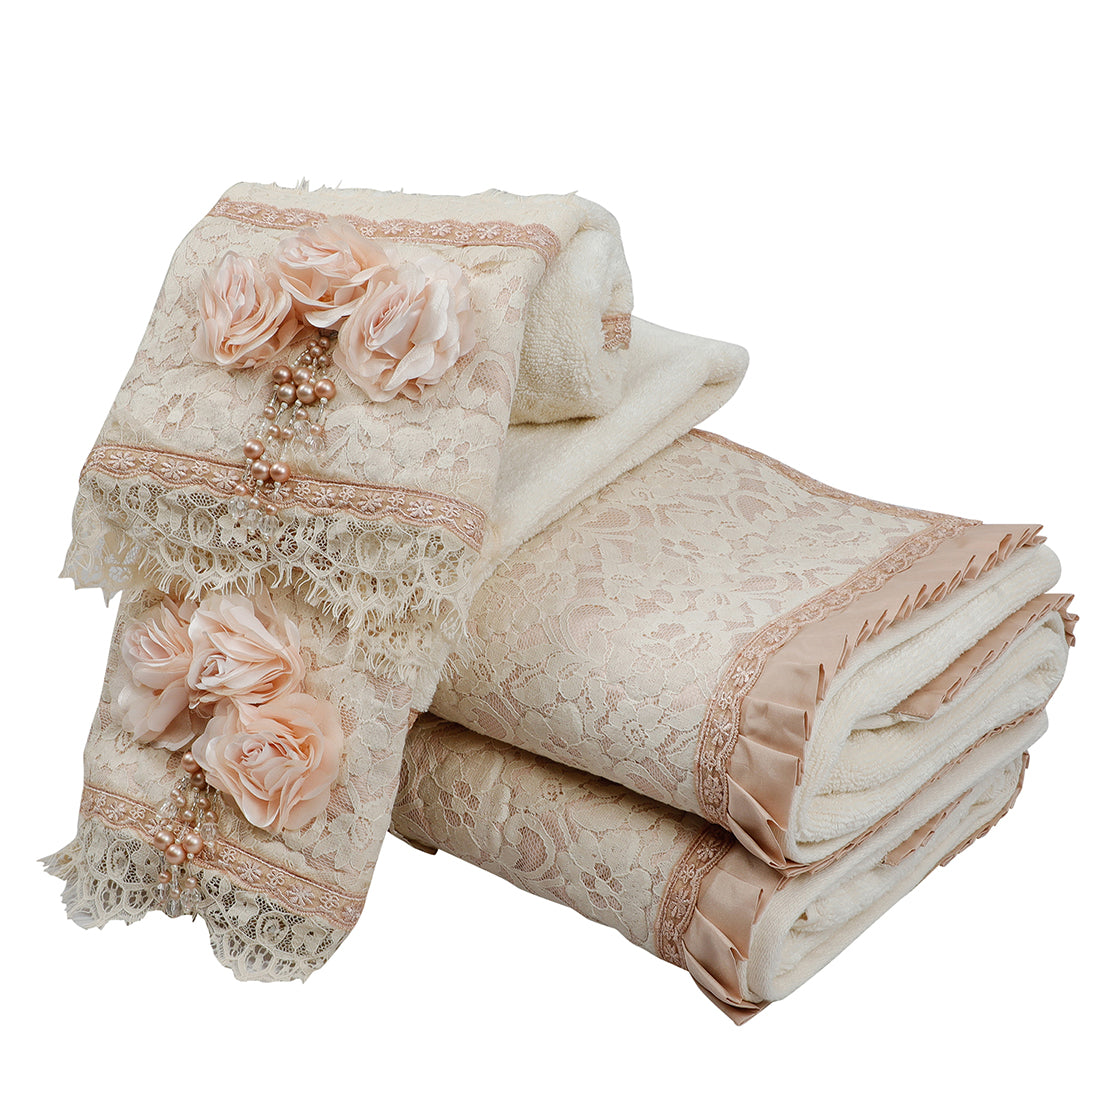 Peach Roset Towels - 4 pc sets - Diva Riche